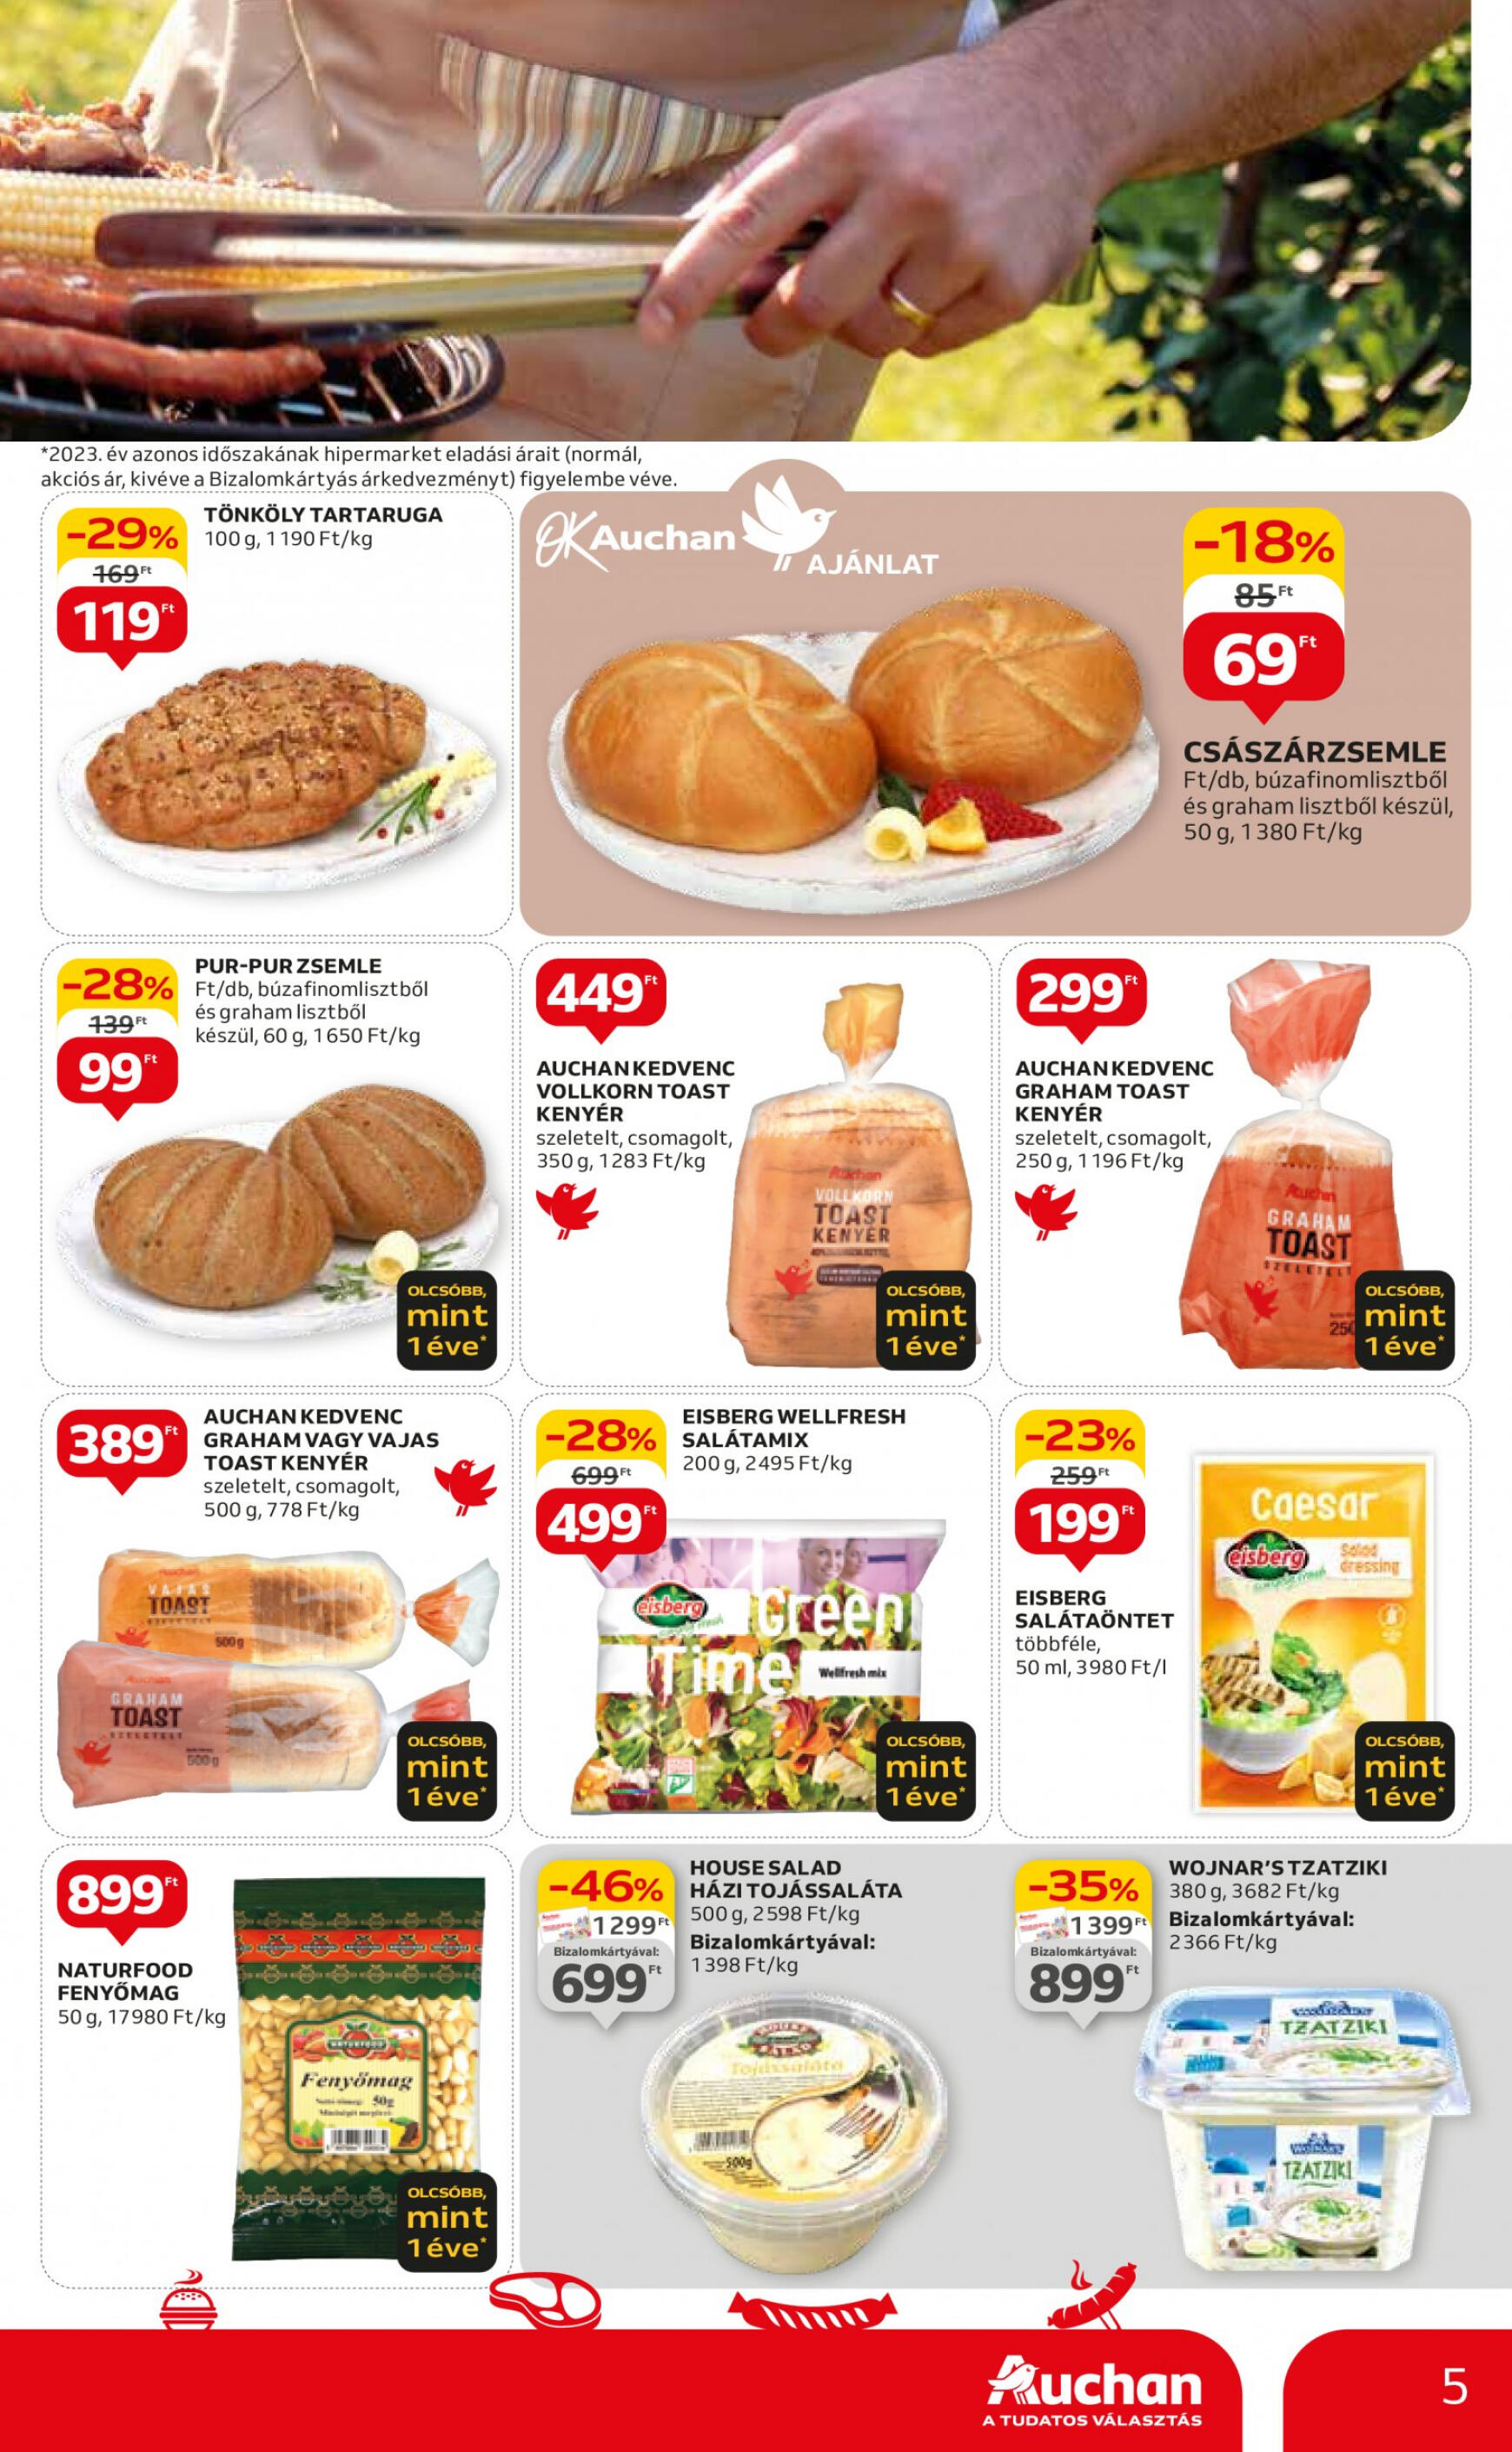 auchan - Aktuális újság Auchan 04.25. - 04.30. - page: 5